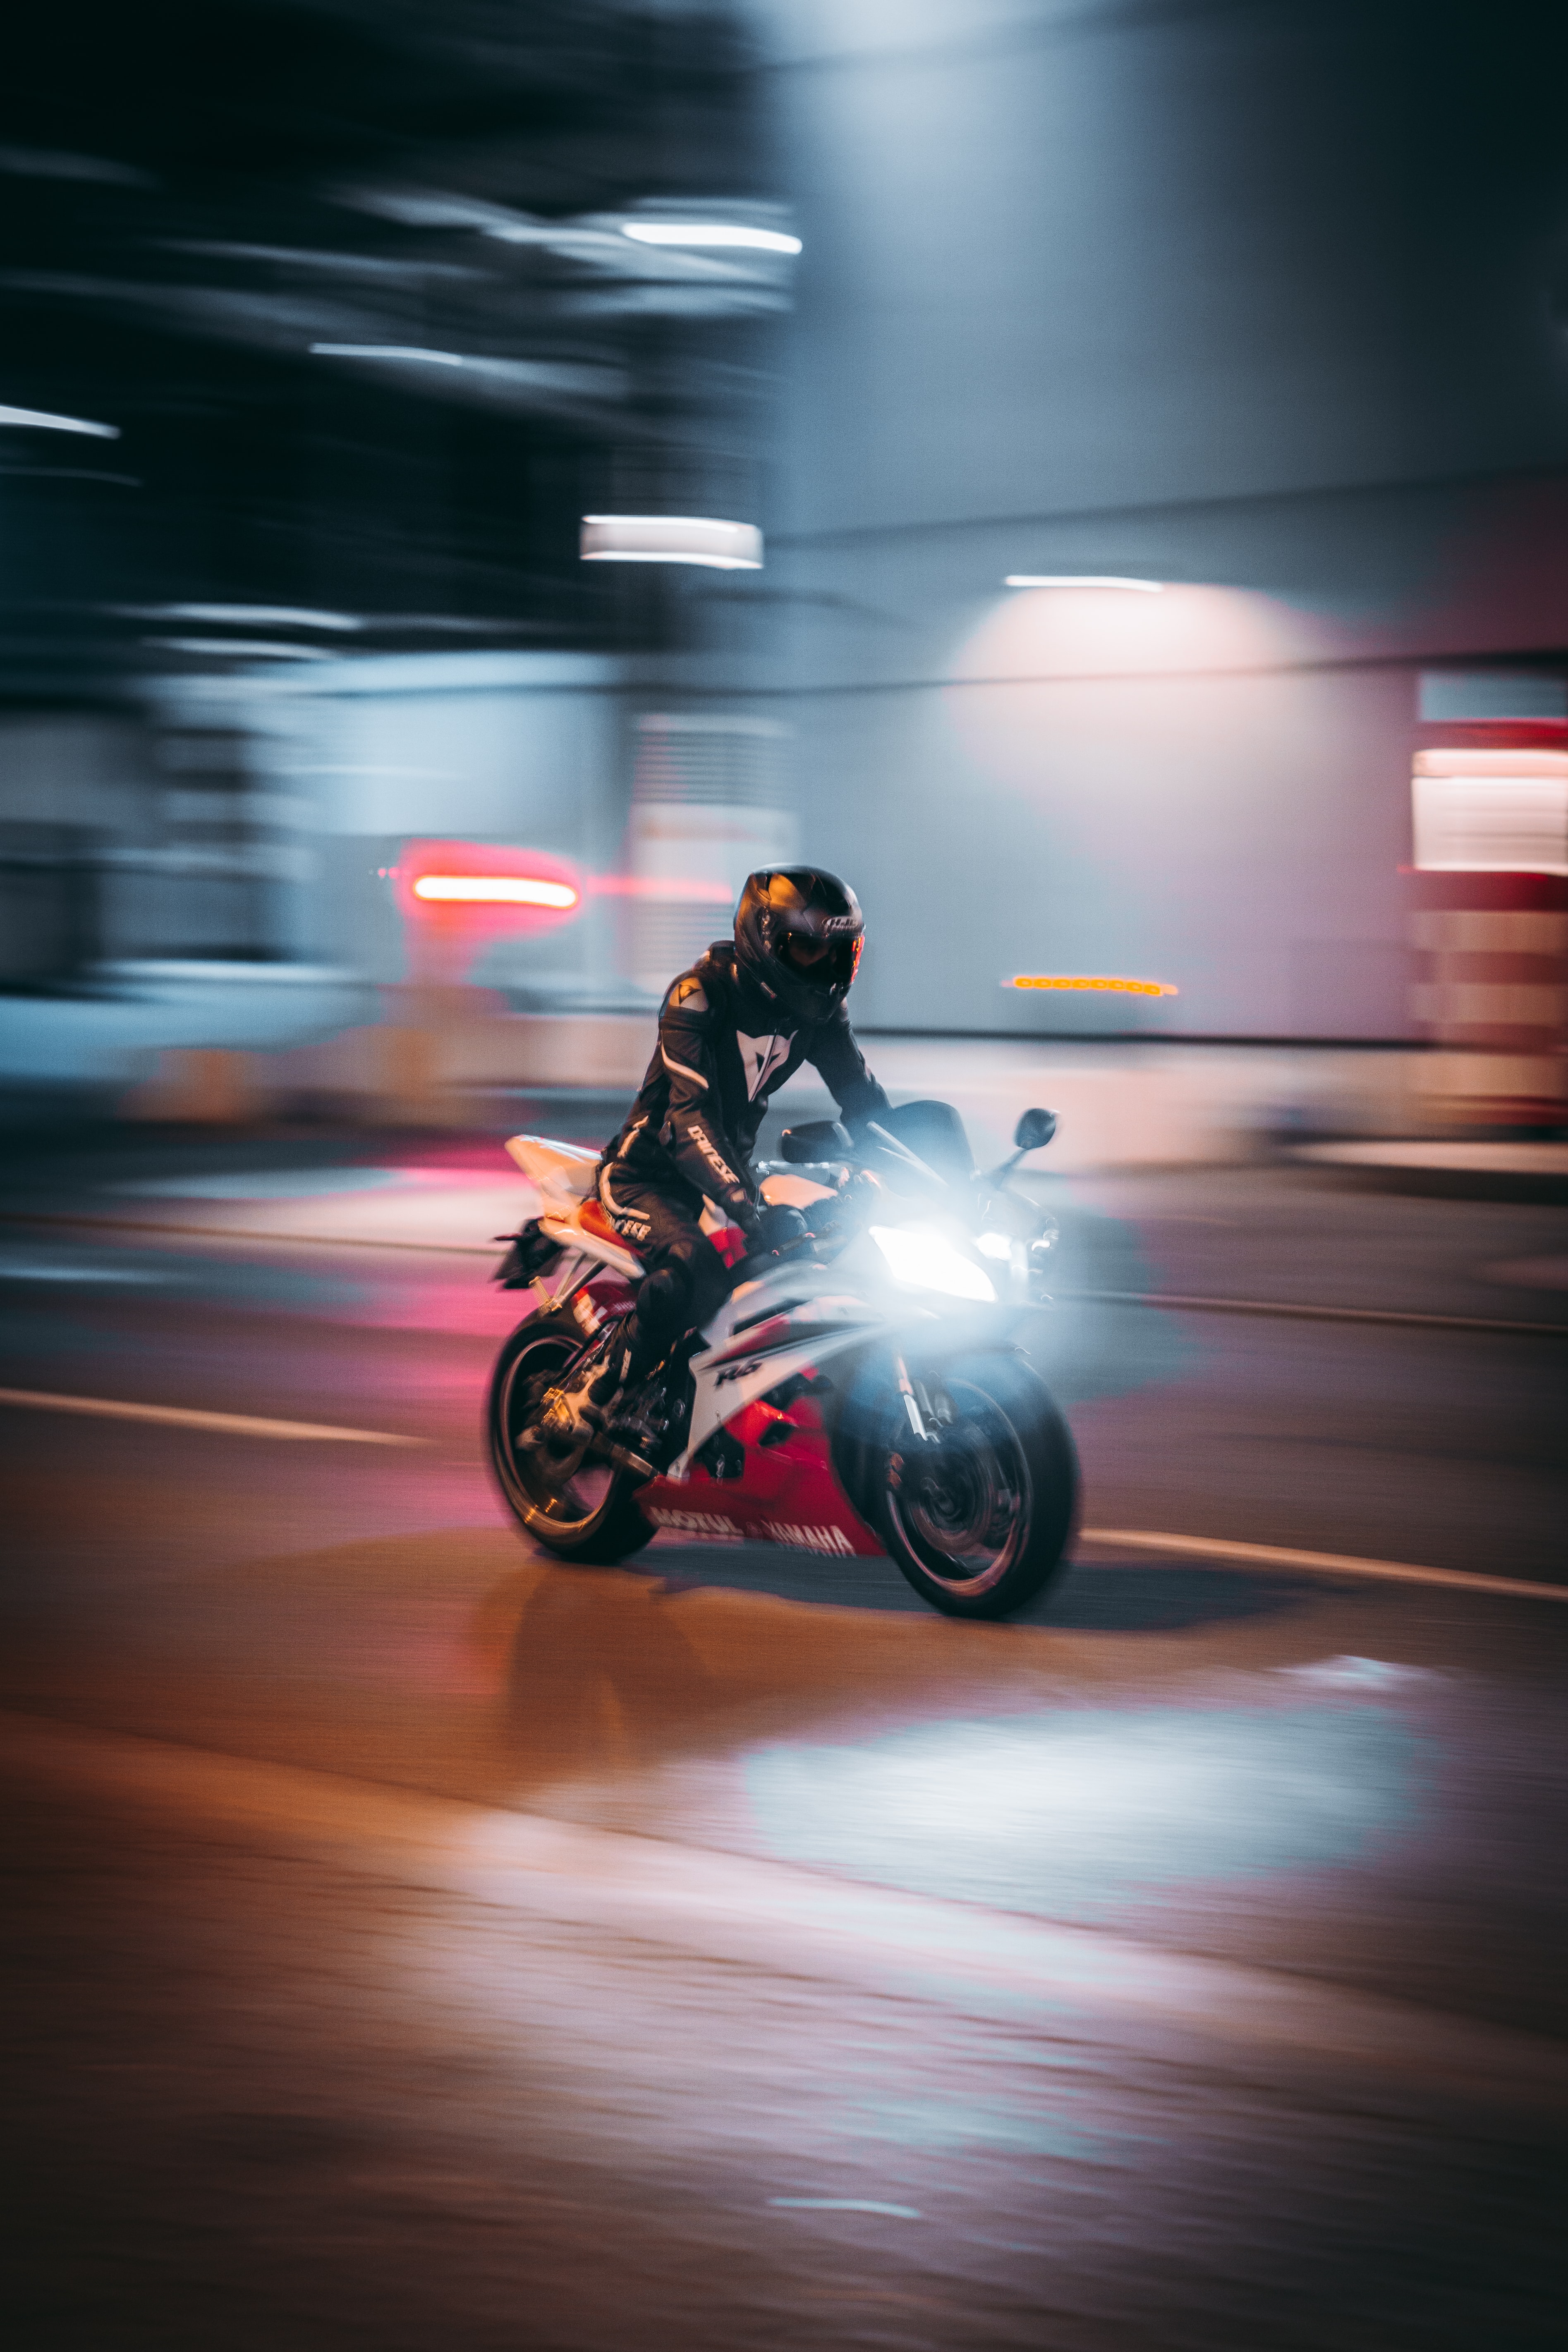 Free HD speed, shine, motorcyclist, bike, motorcycles, light, road, motorcycle